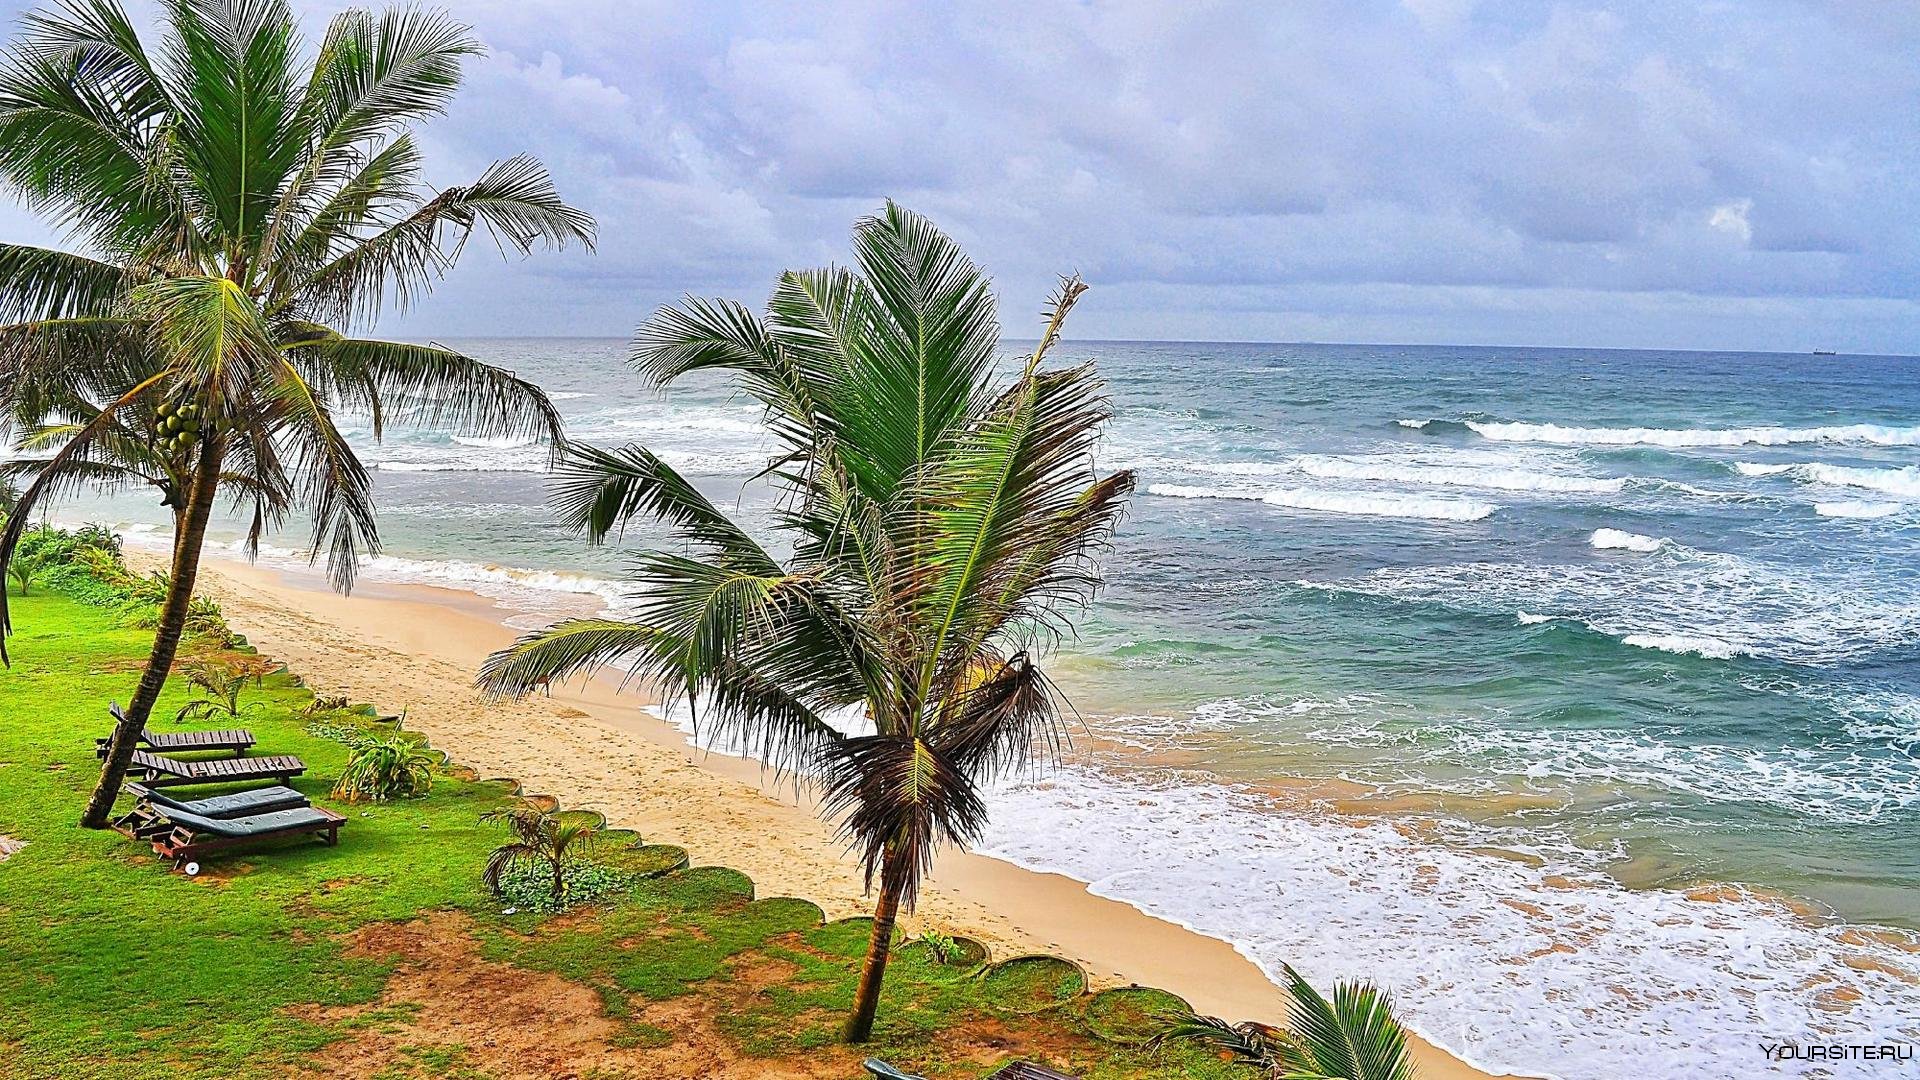 Koggala village. Коггала Шри Ланка. Пляж Коггала Шри Ланка. Коггала Виладж. Шри-Ланка, Матара, Коггала.